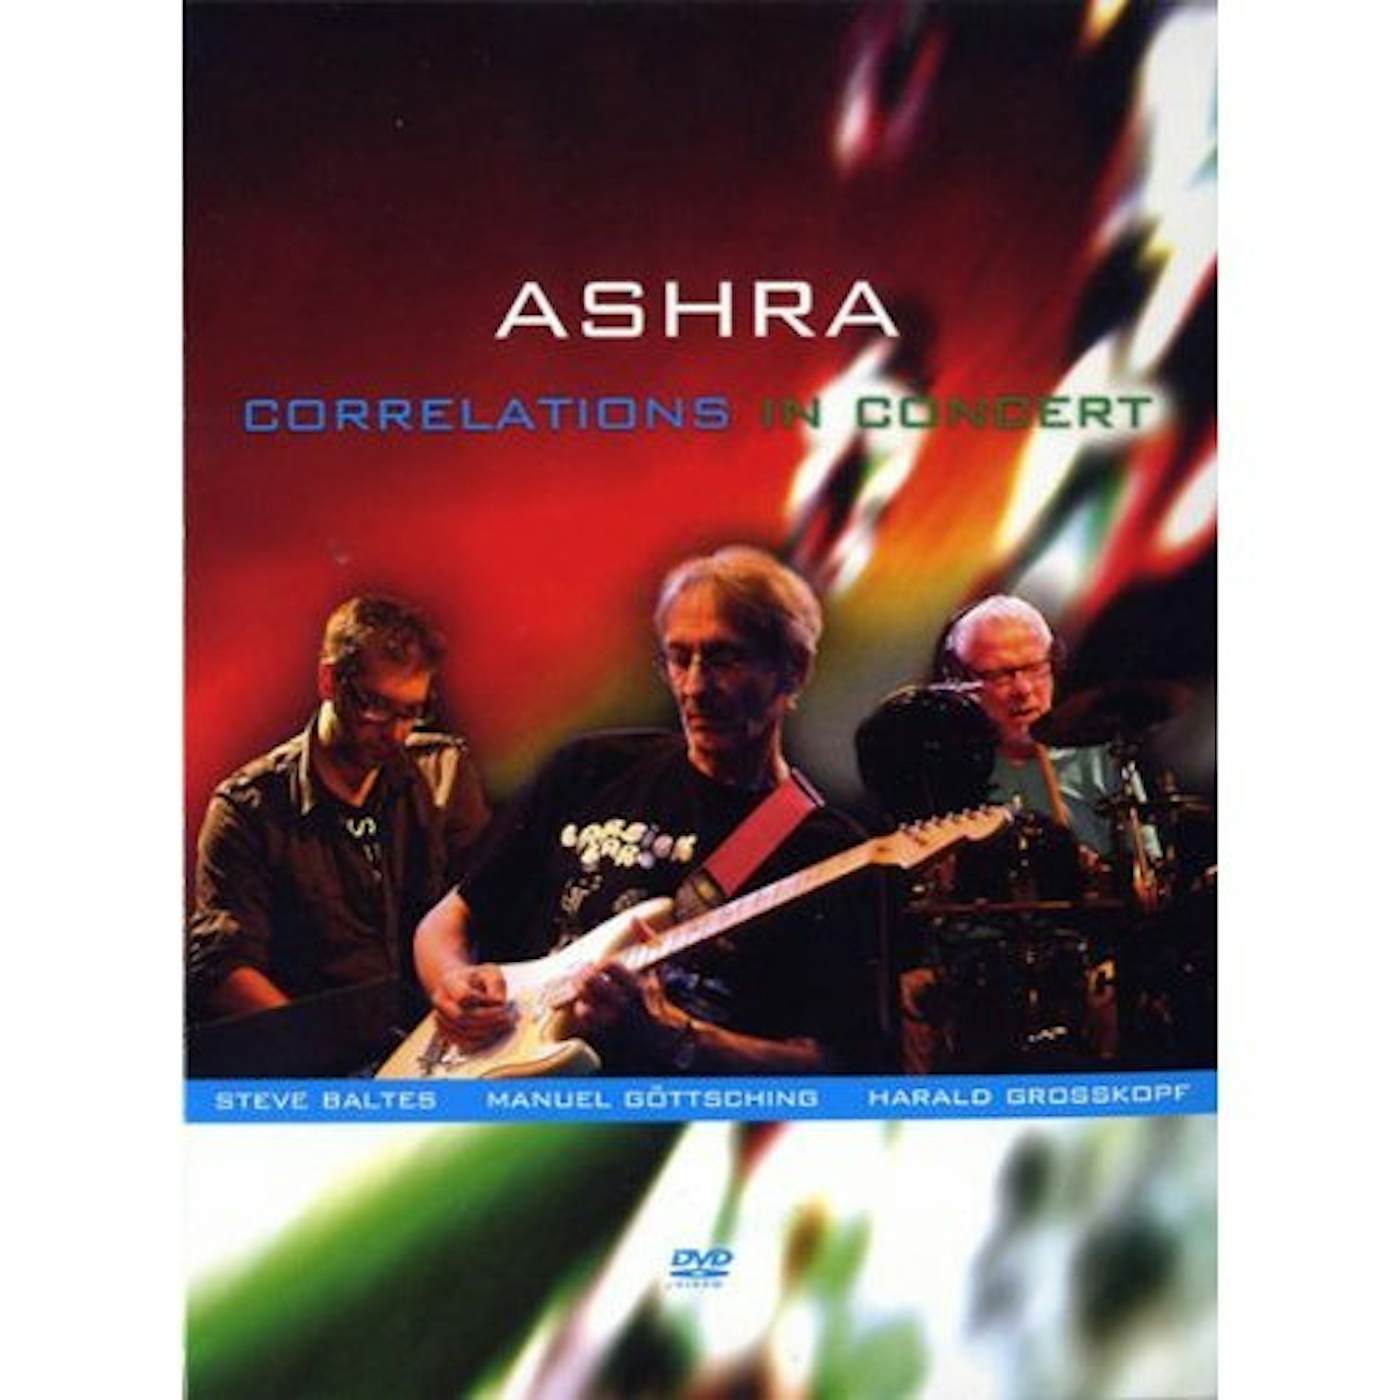 Ashra CORRELATIONS IN CONCERT DVD